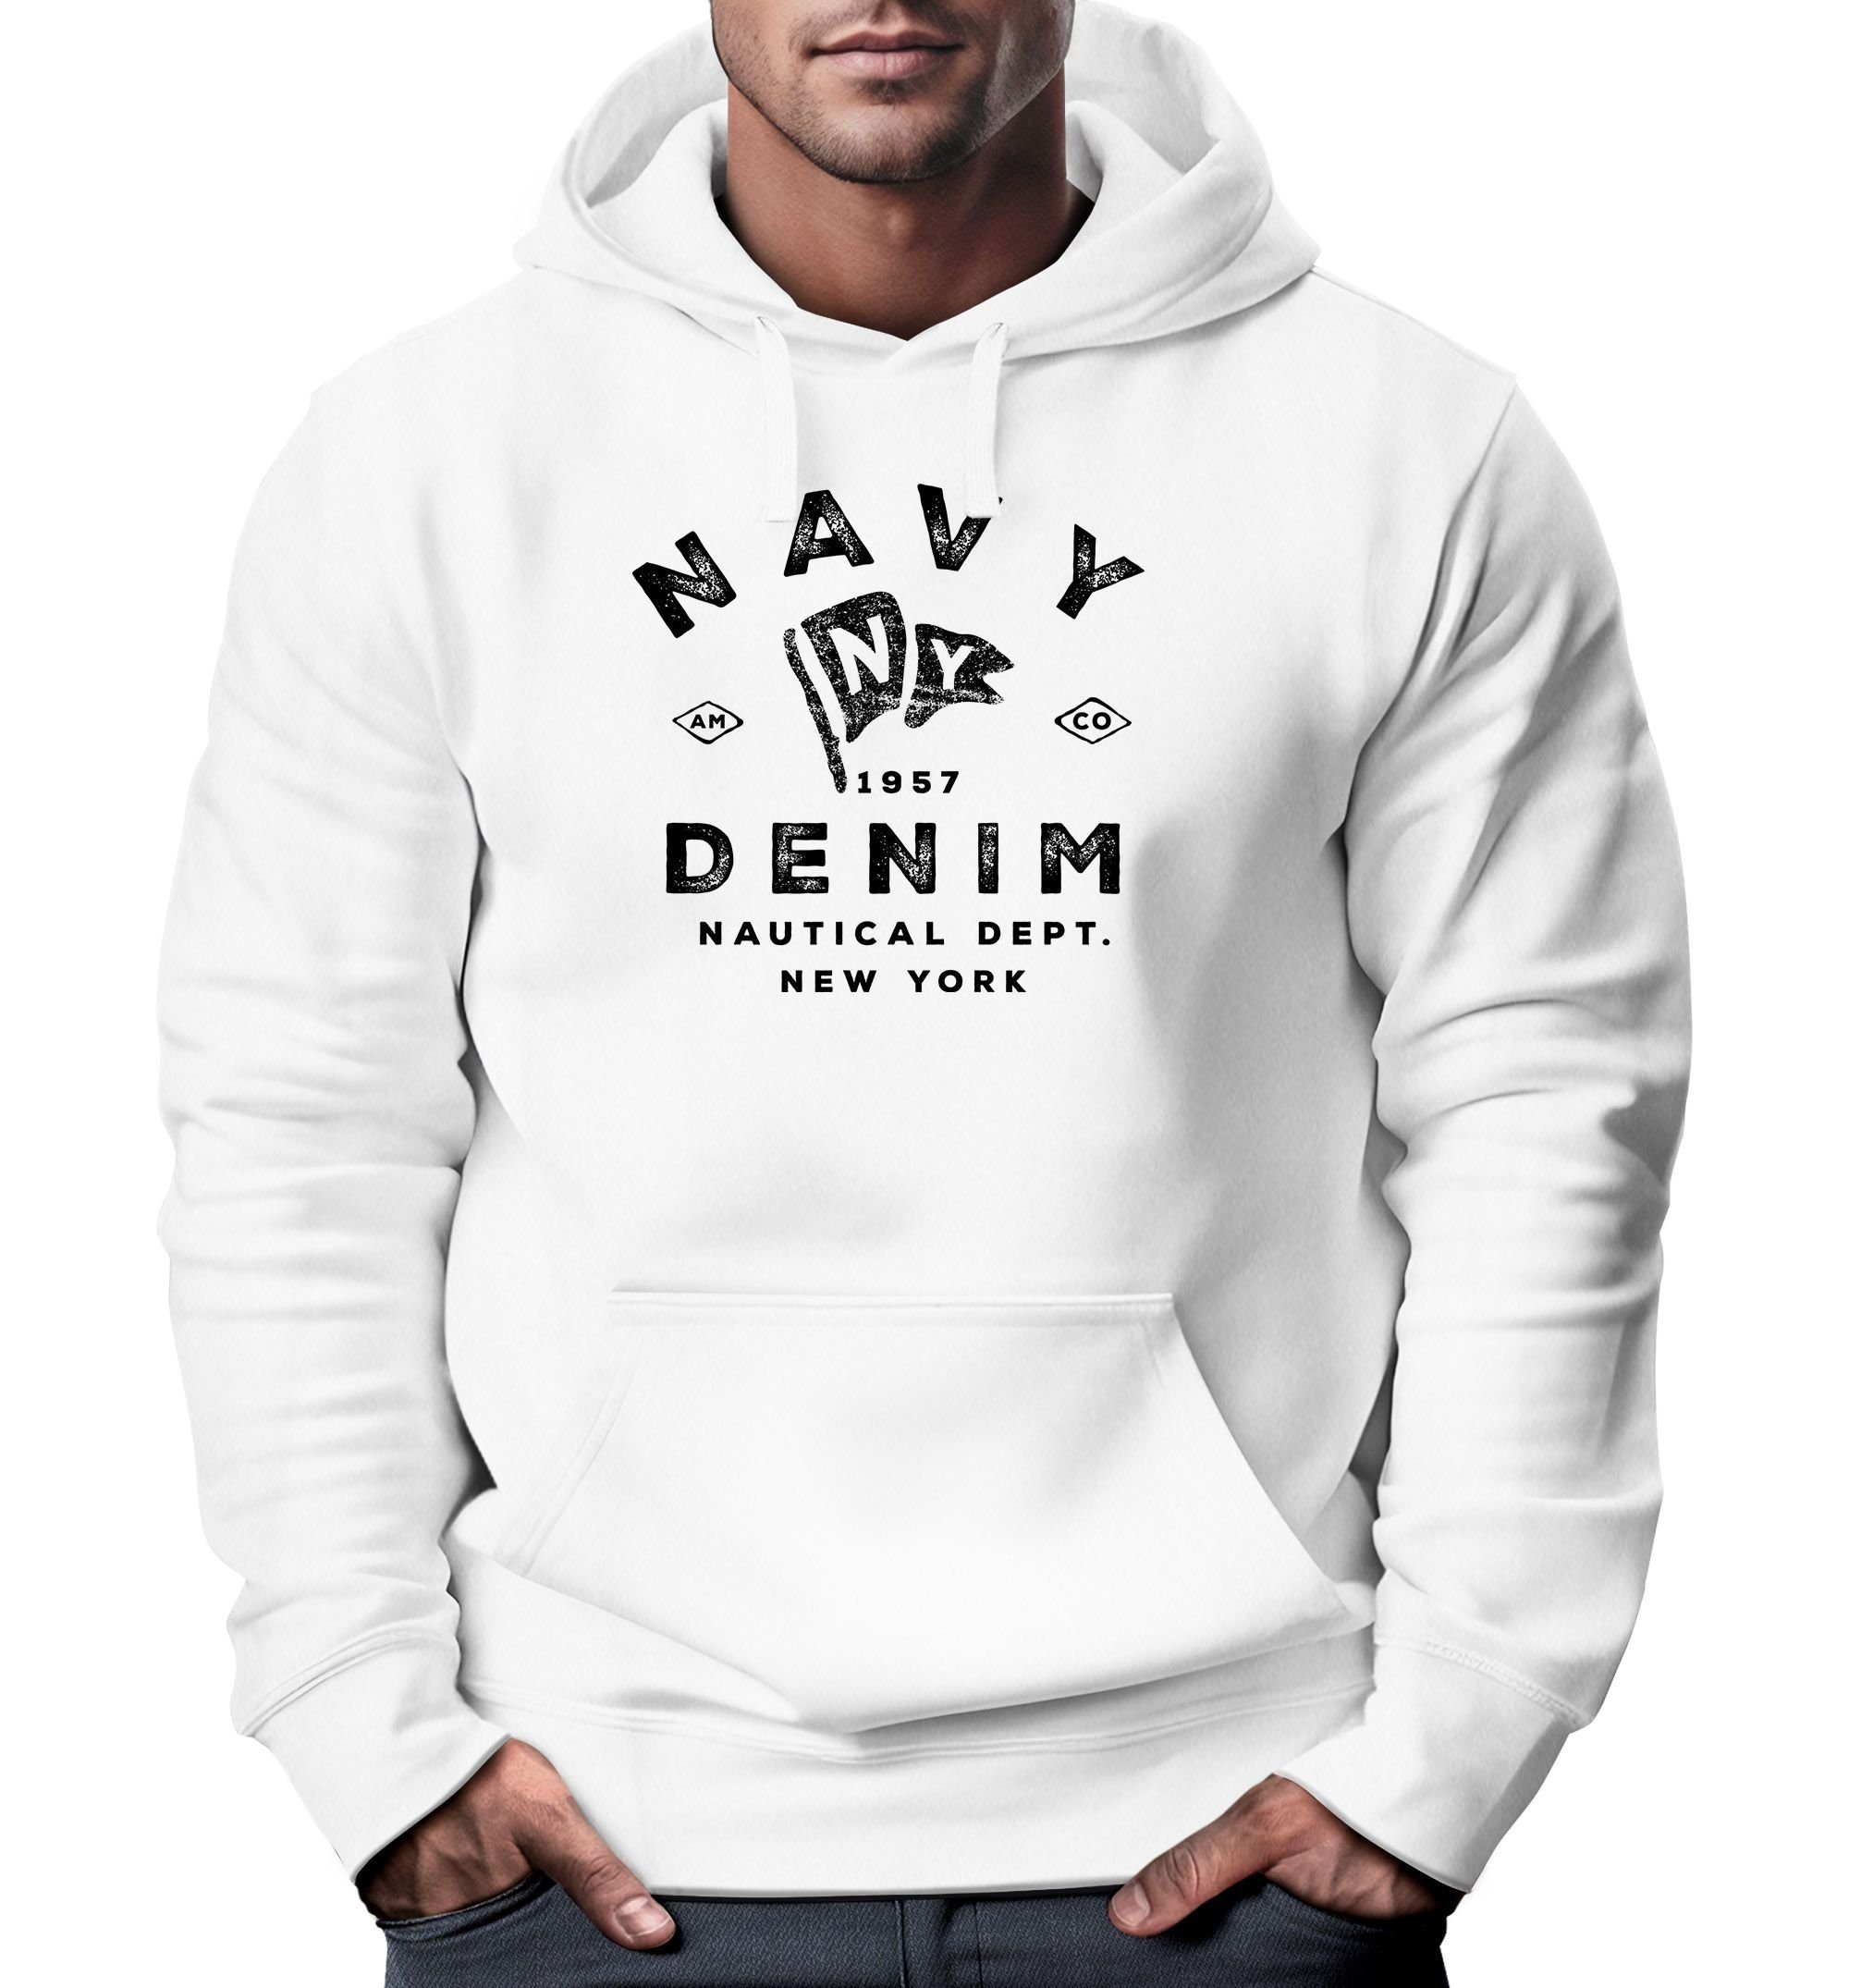 Neverless Hoodie Hoodie Herren vintage Motiv Schriftzug Navy Denim Nautical New York Kapuzen-Pullover MännerNeverless® weiß